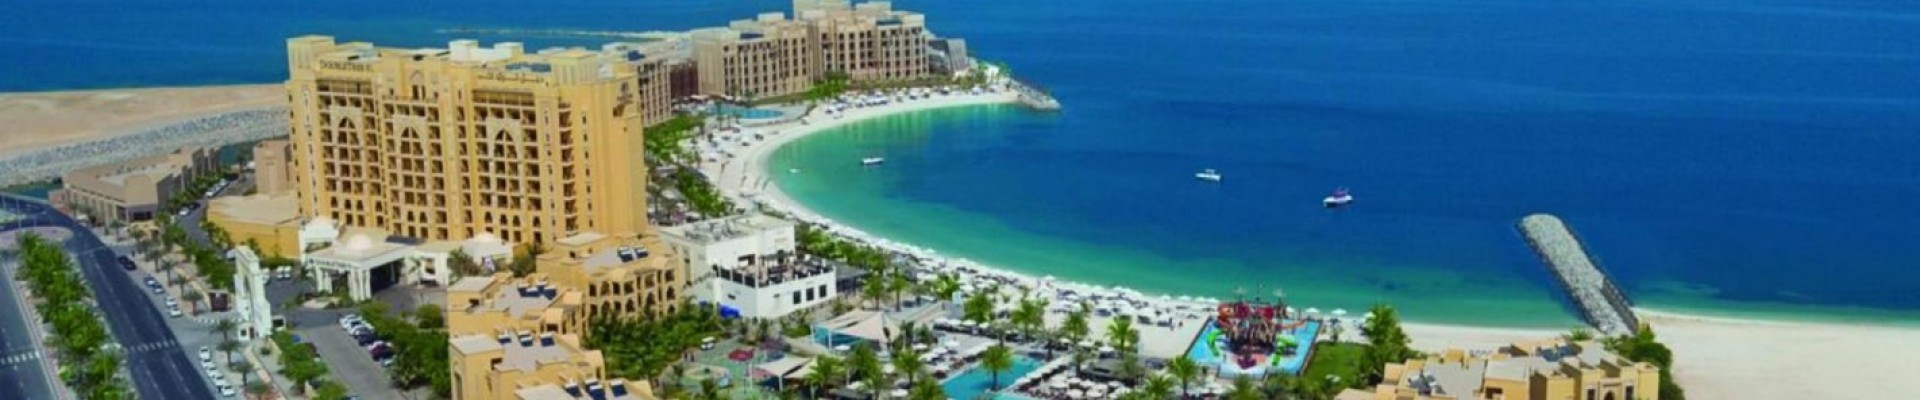 5* DoubleTree by Hilton Resort & Spa - Marjan Island - Ras Al Khaimah (5 Nights)